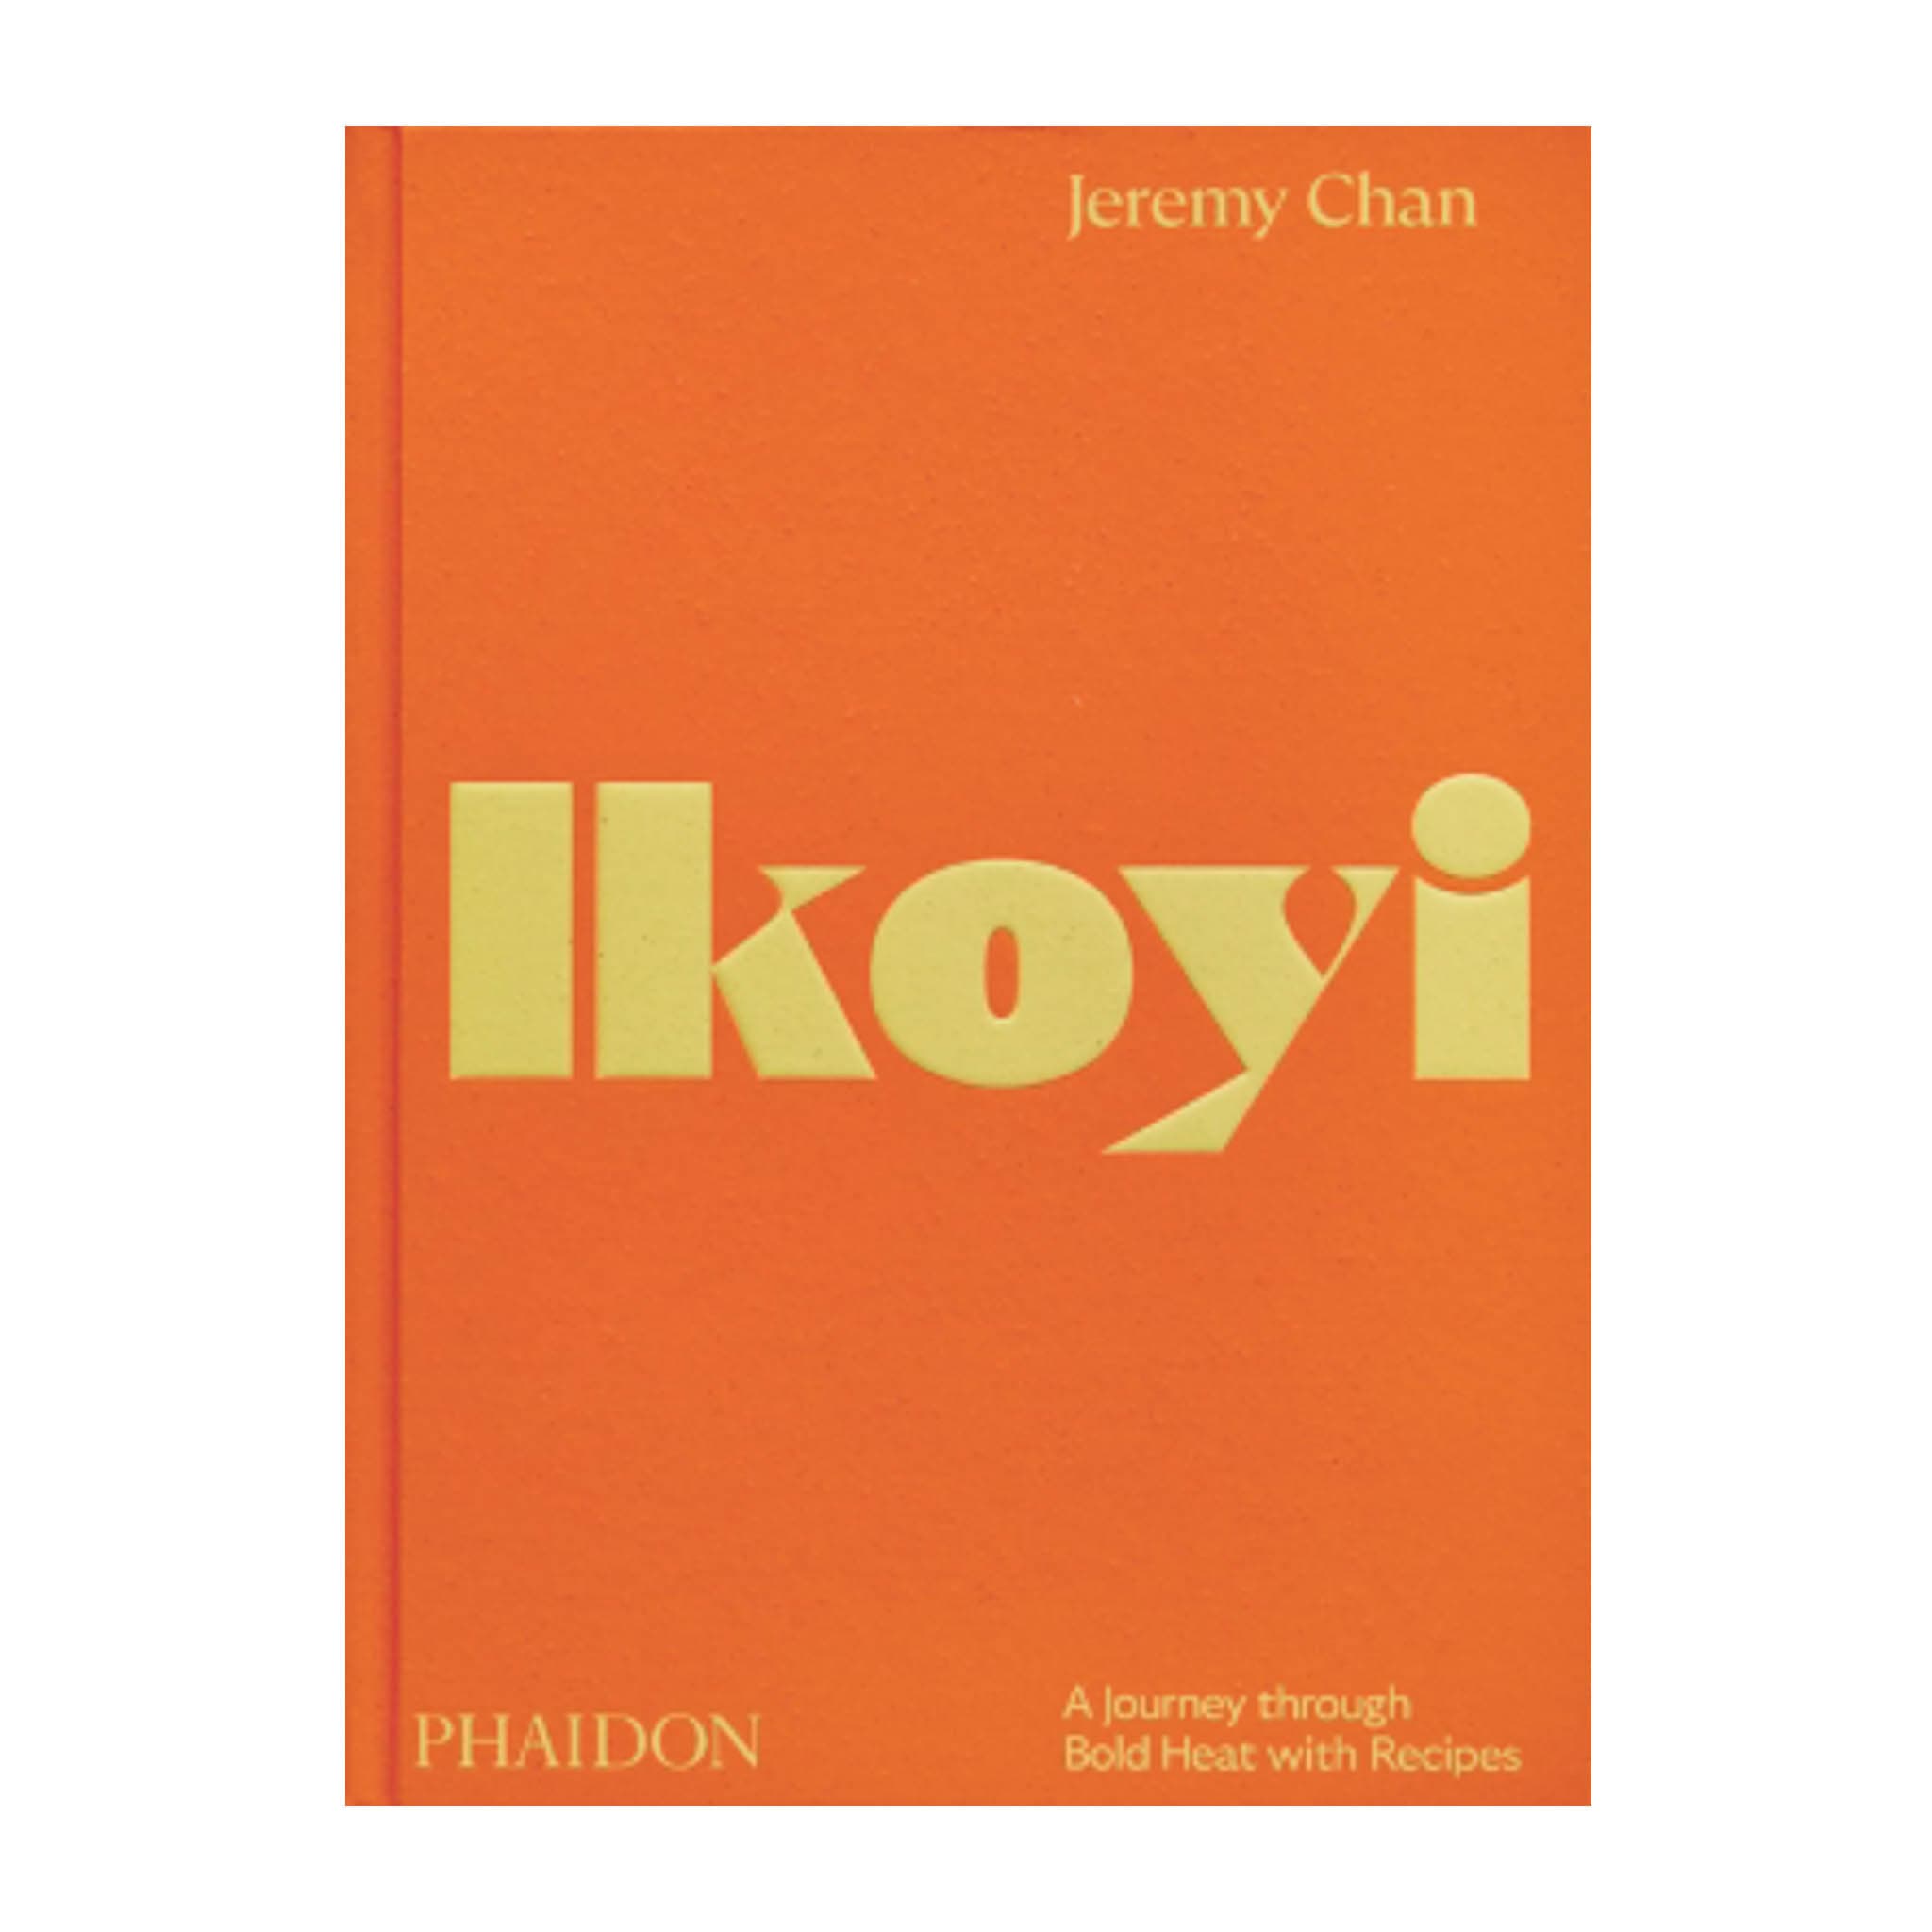 Ikoyi, by Jeremy Chan